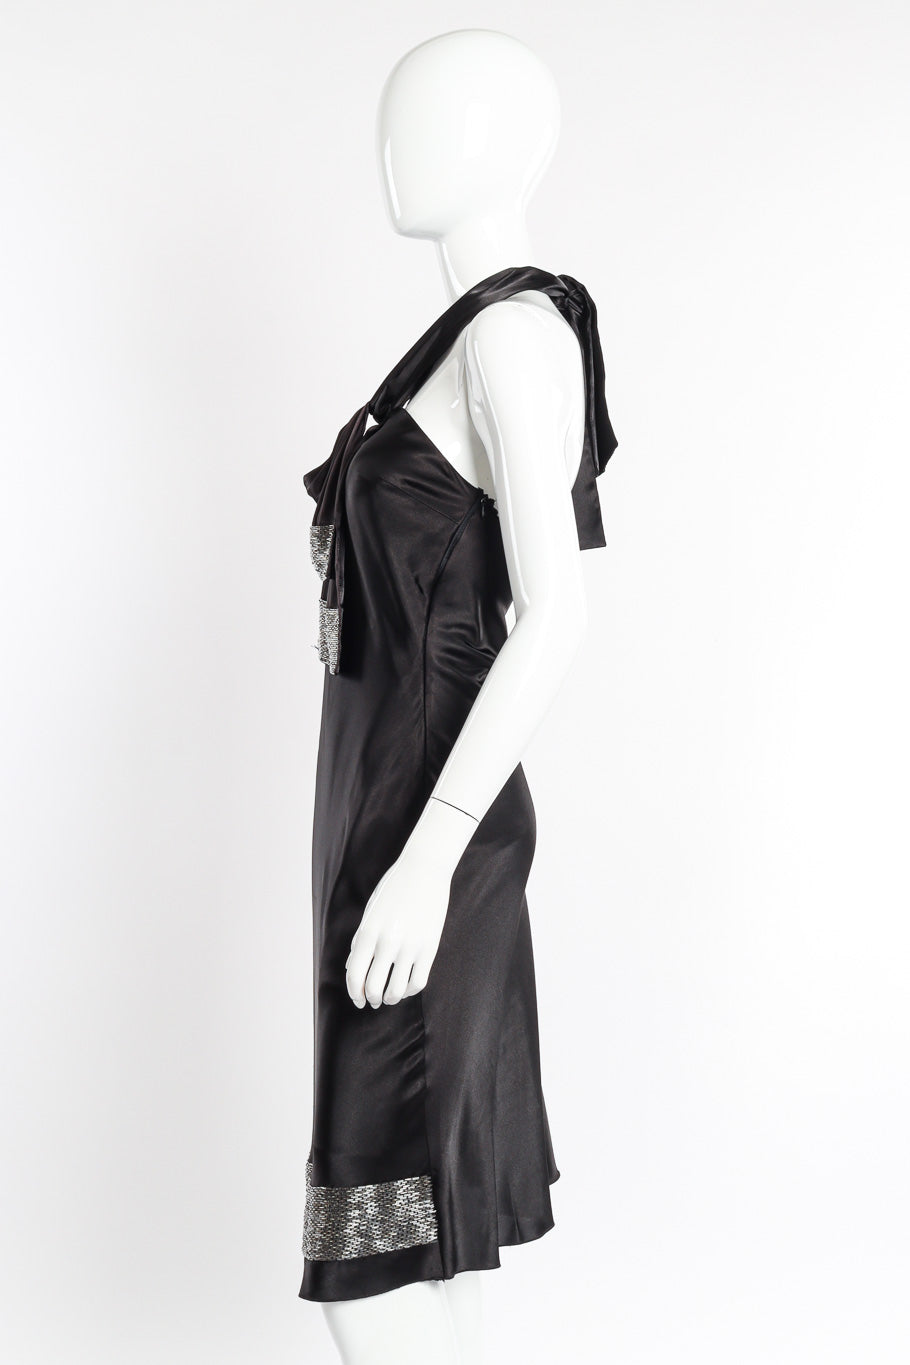 Christian Dior Silk Beaded Halter Dress side view on mannequin @recessla